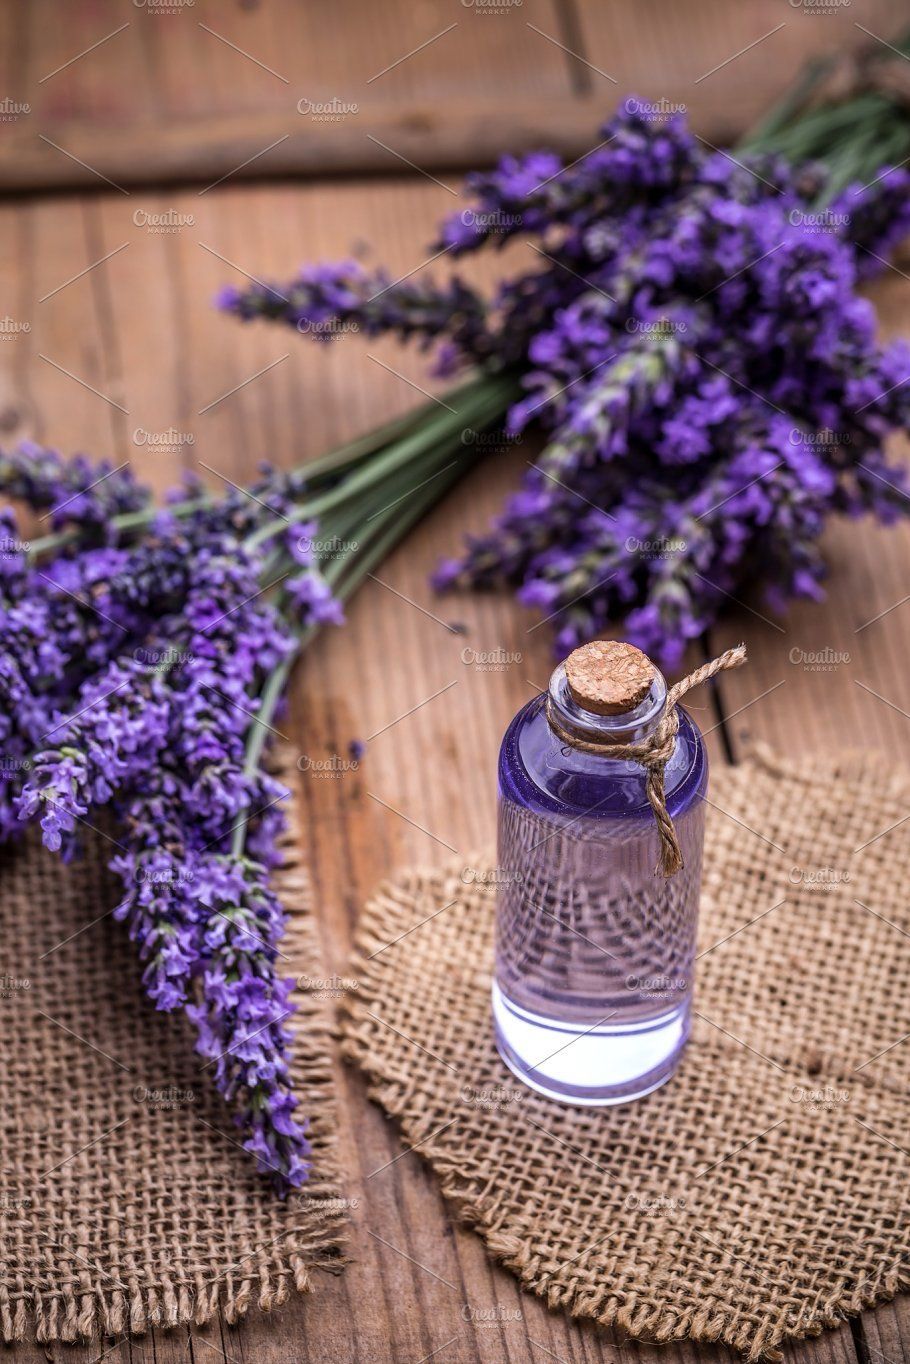 Aroma Terapi Bunga Lavender Mampu Mengurangi Cemas Sebelum Mastectomy (Operasi pengangkatan Payudara)